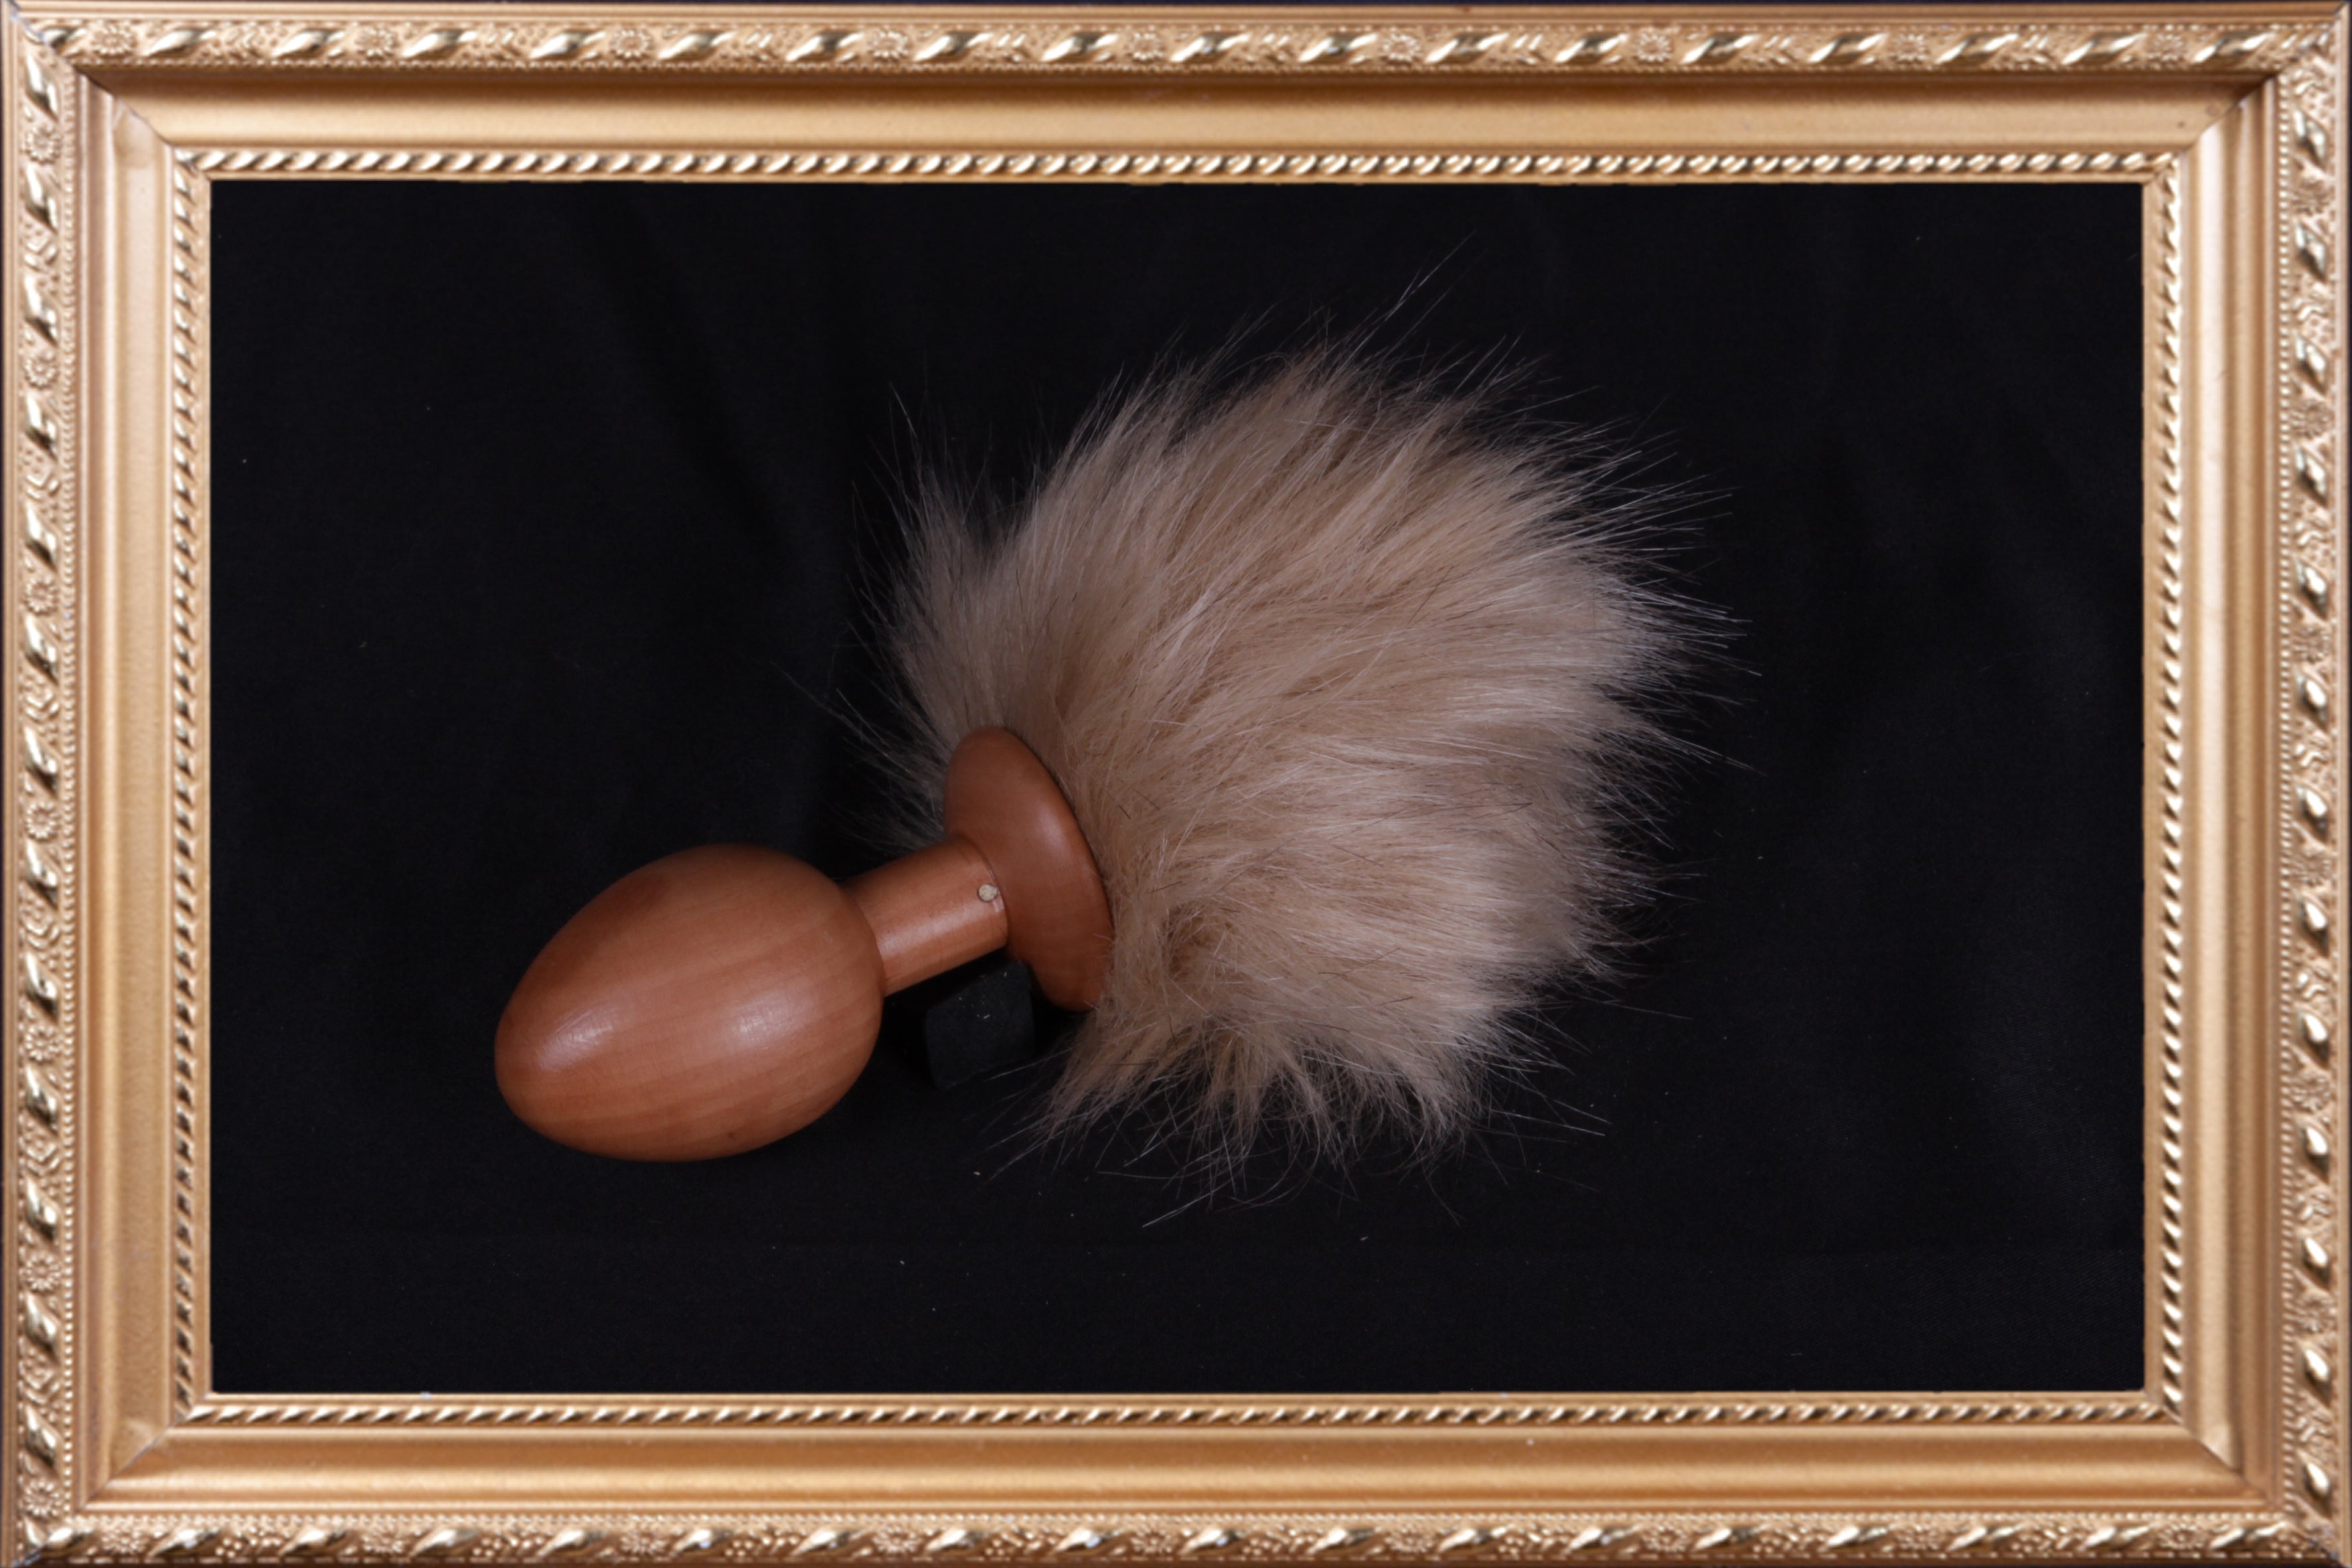 OACHKATZLSCHWOAF Birne Hase Beige || Wooden Furry Tail Anal Butt Plug Holz|| Fox Bunny Raccoon || Sex Toy || Handmade by Holz-Knecht.at